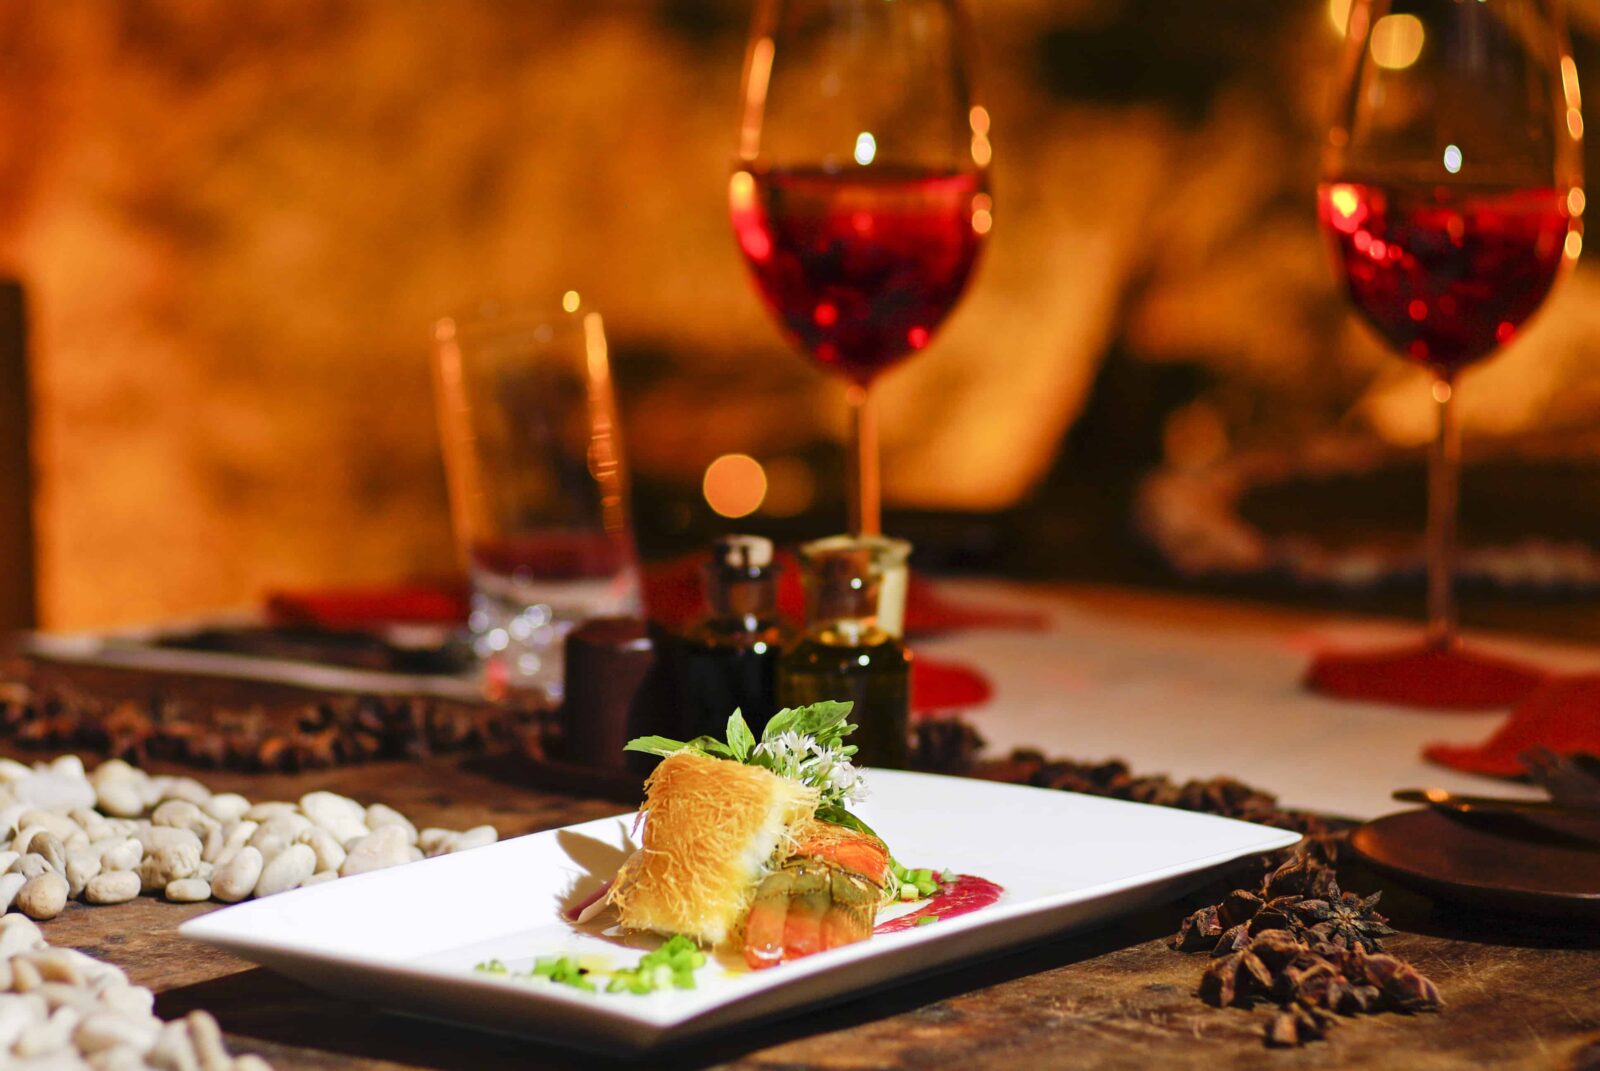 Romantic salmon steak dinner with red wine